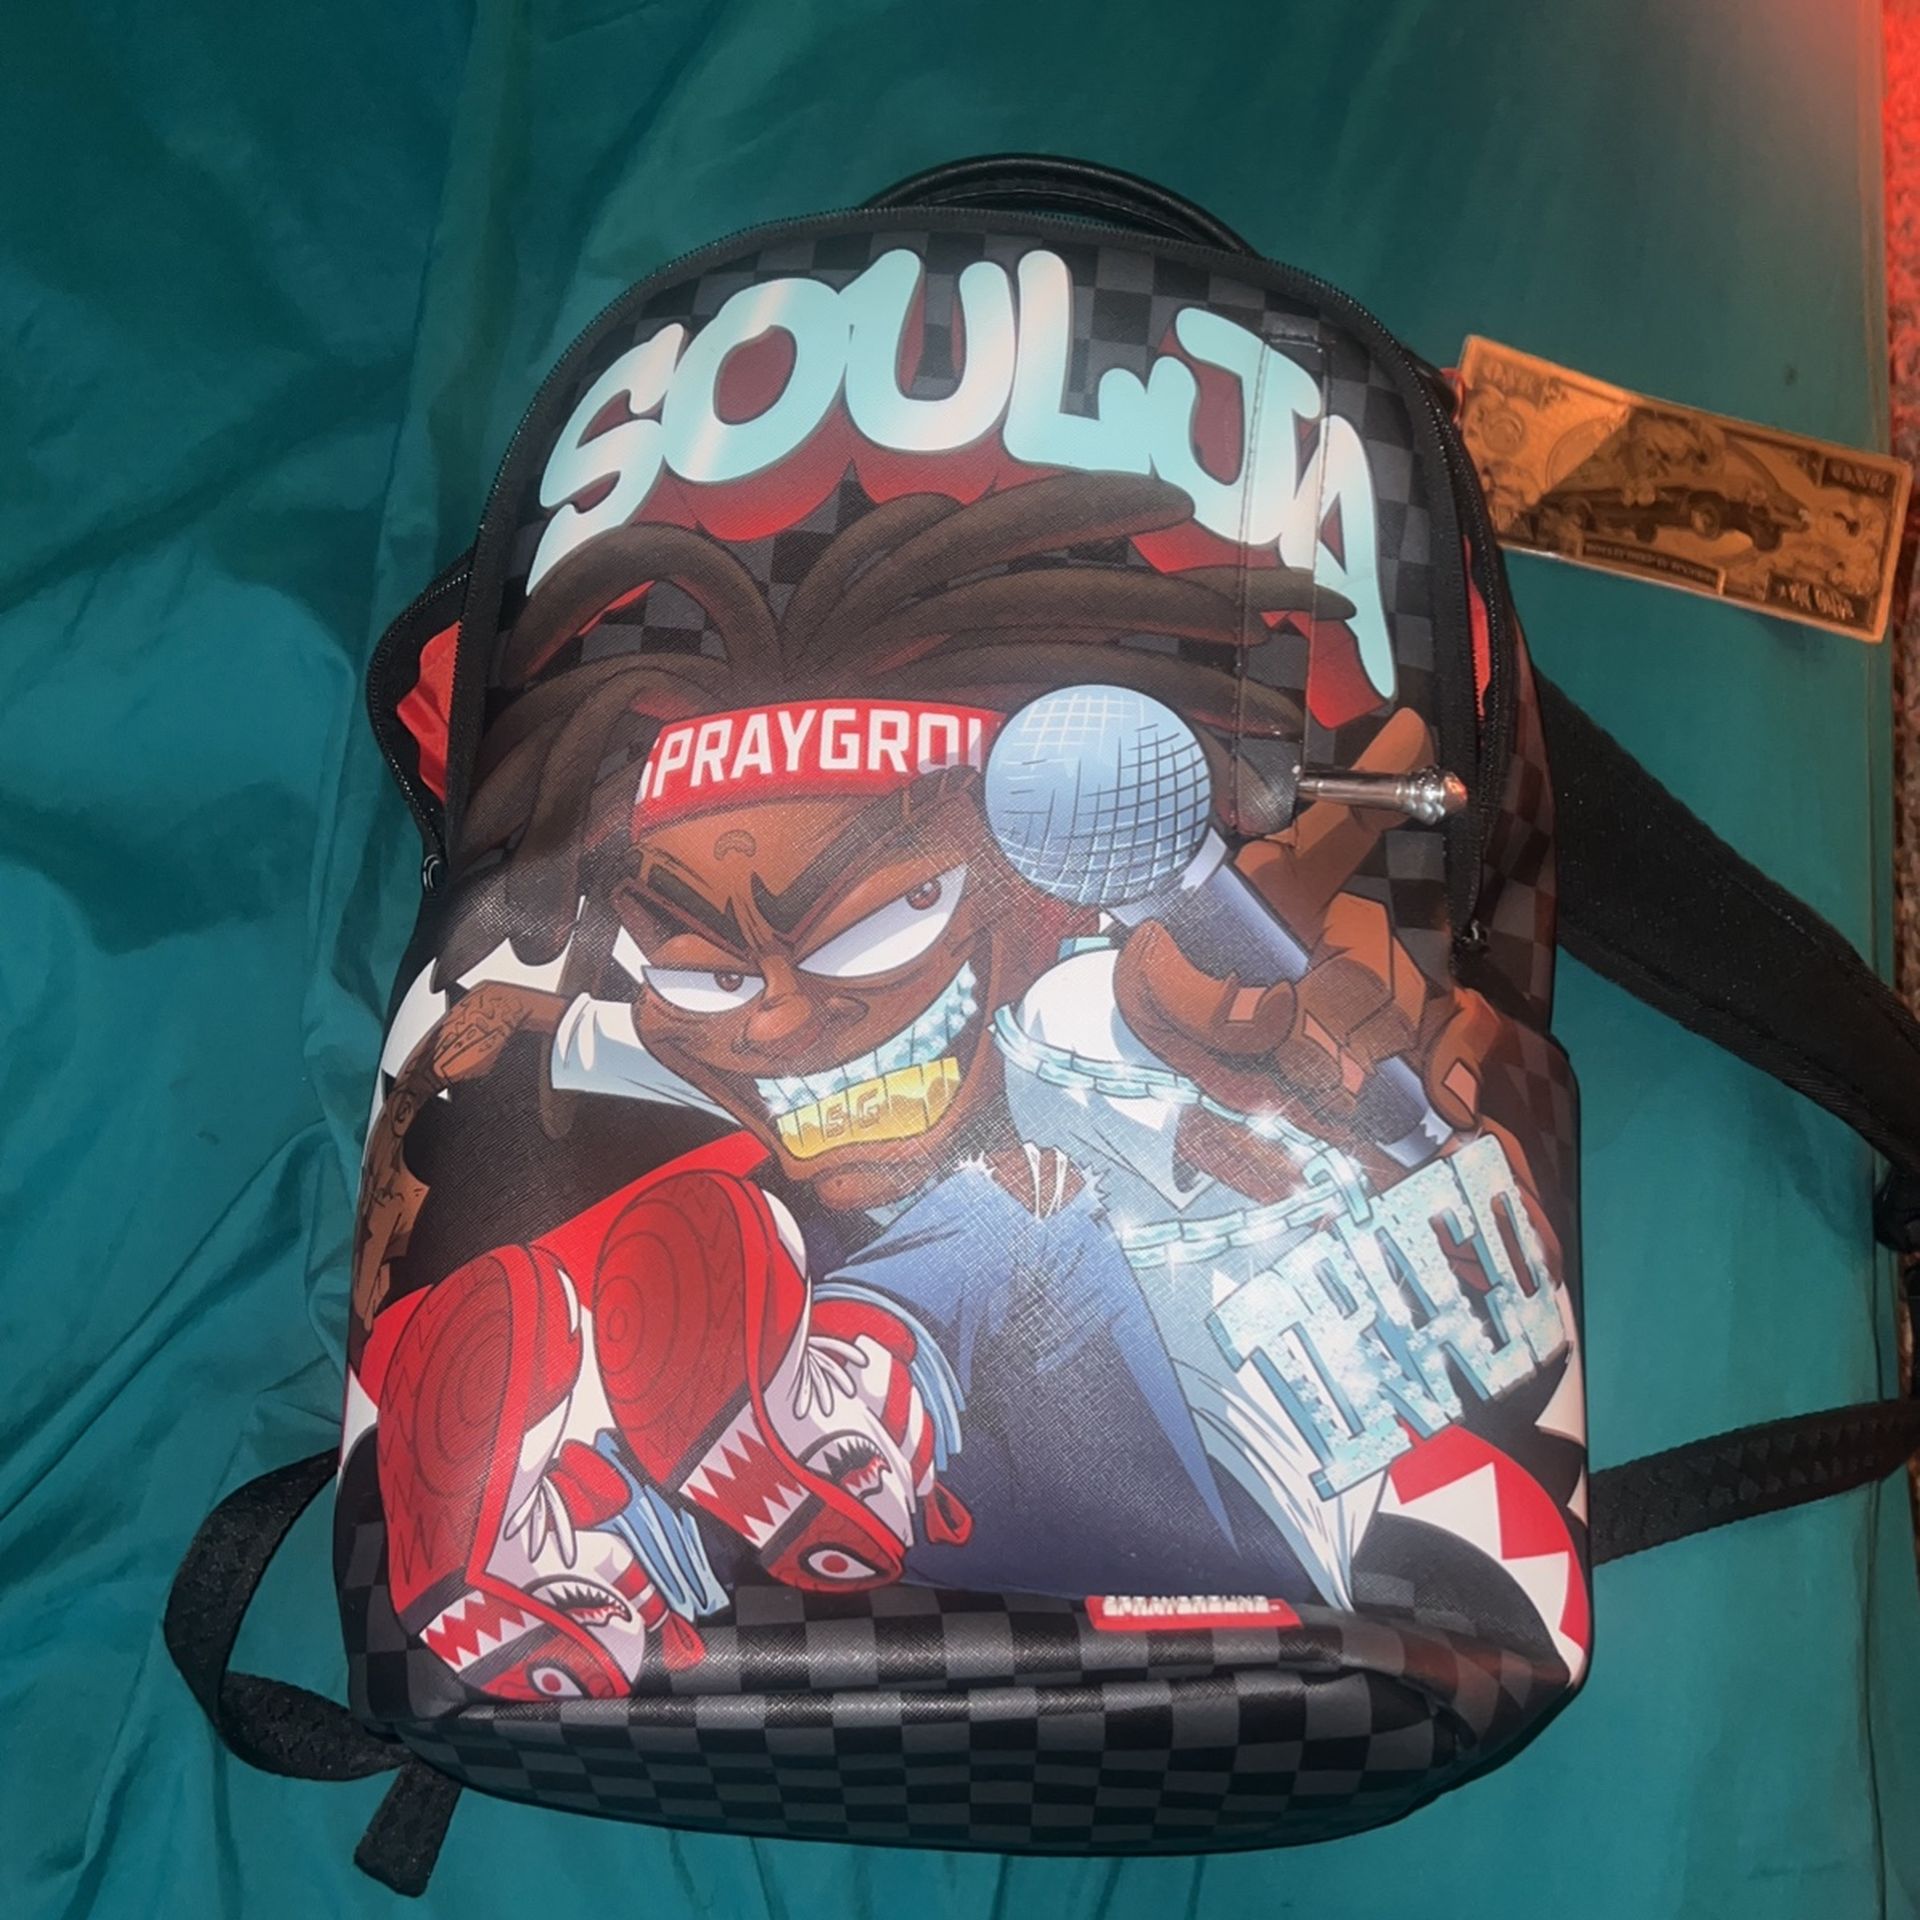 Sprayground Soulja boy Checkered Bag